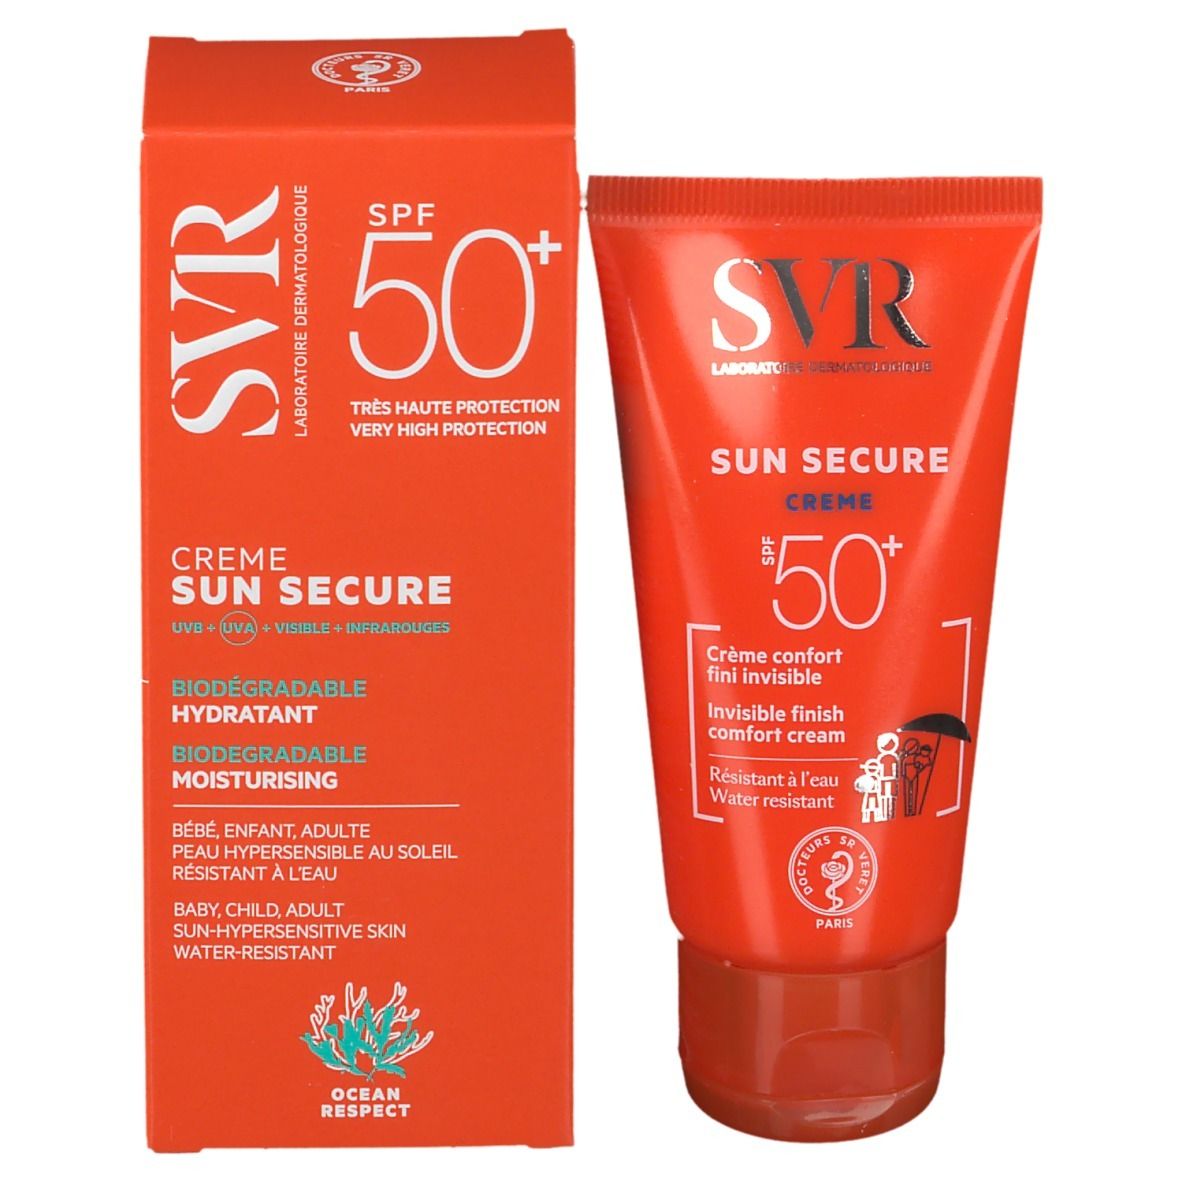 SVR Sun Secure Creme SPF50+